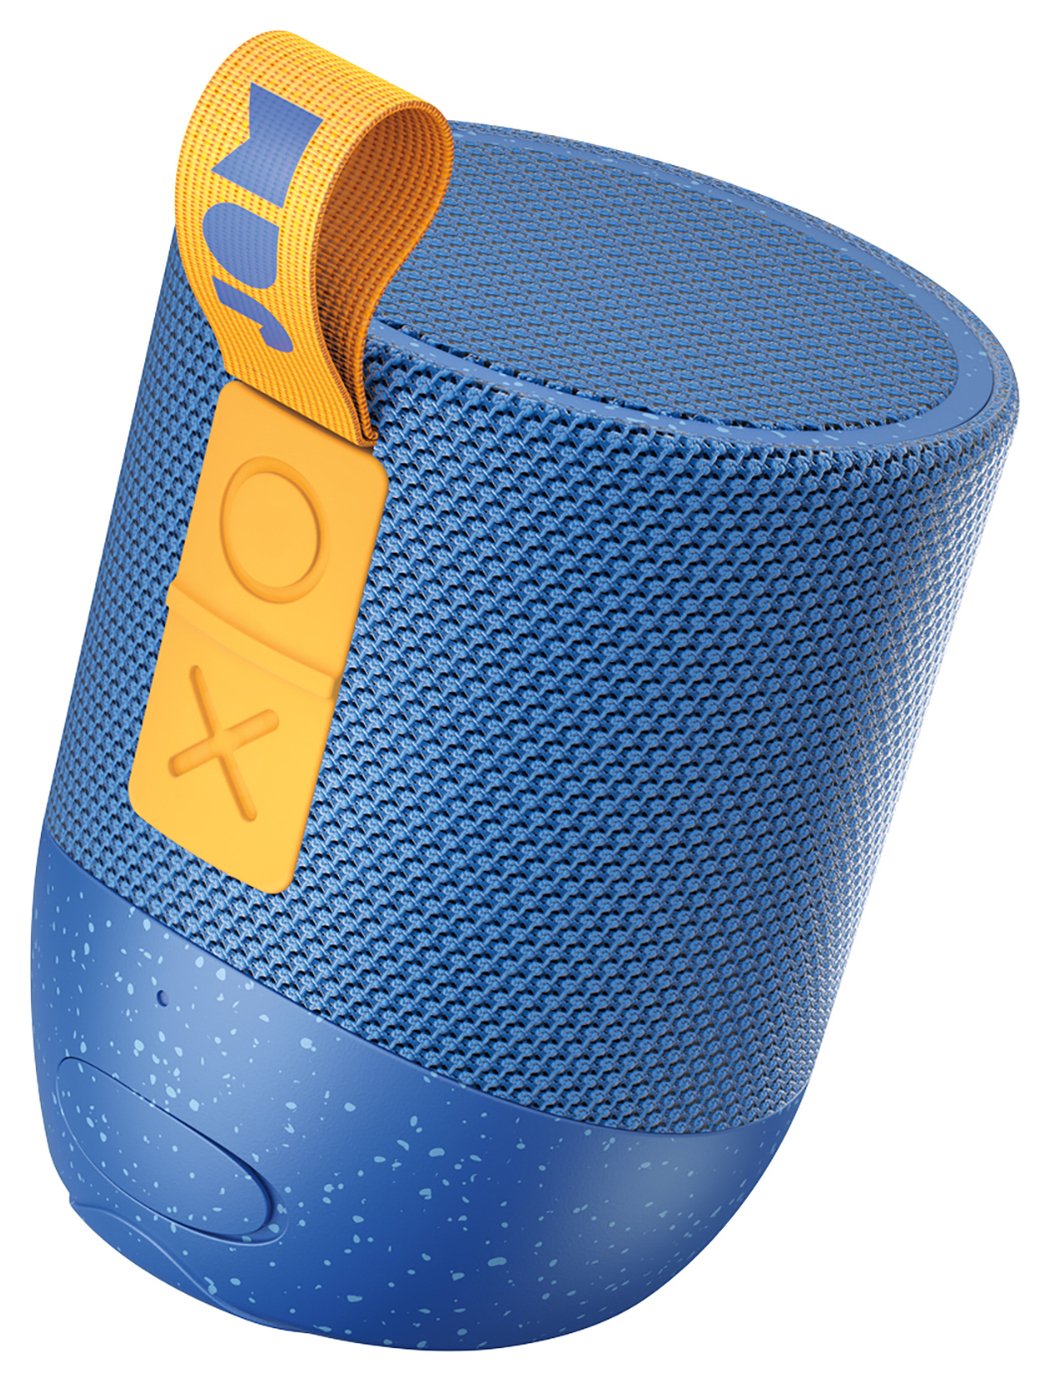 Jam Double Chill Bluetooth Speaker - Blue